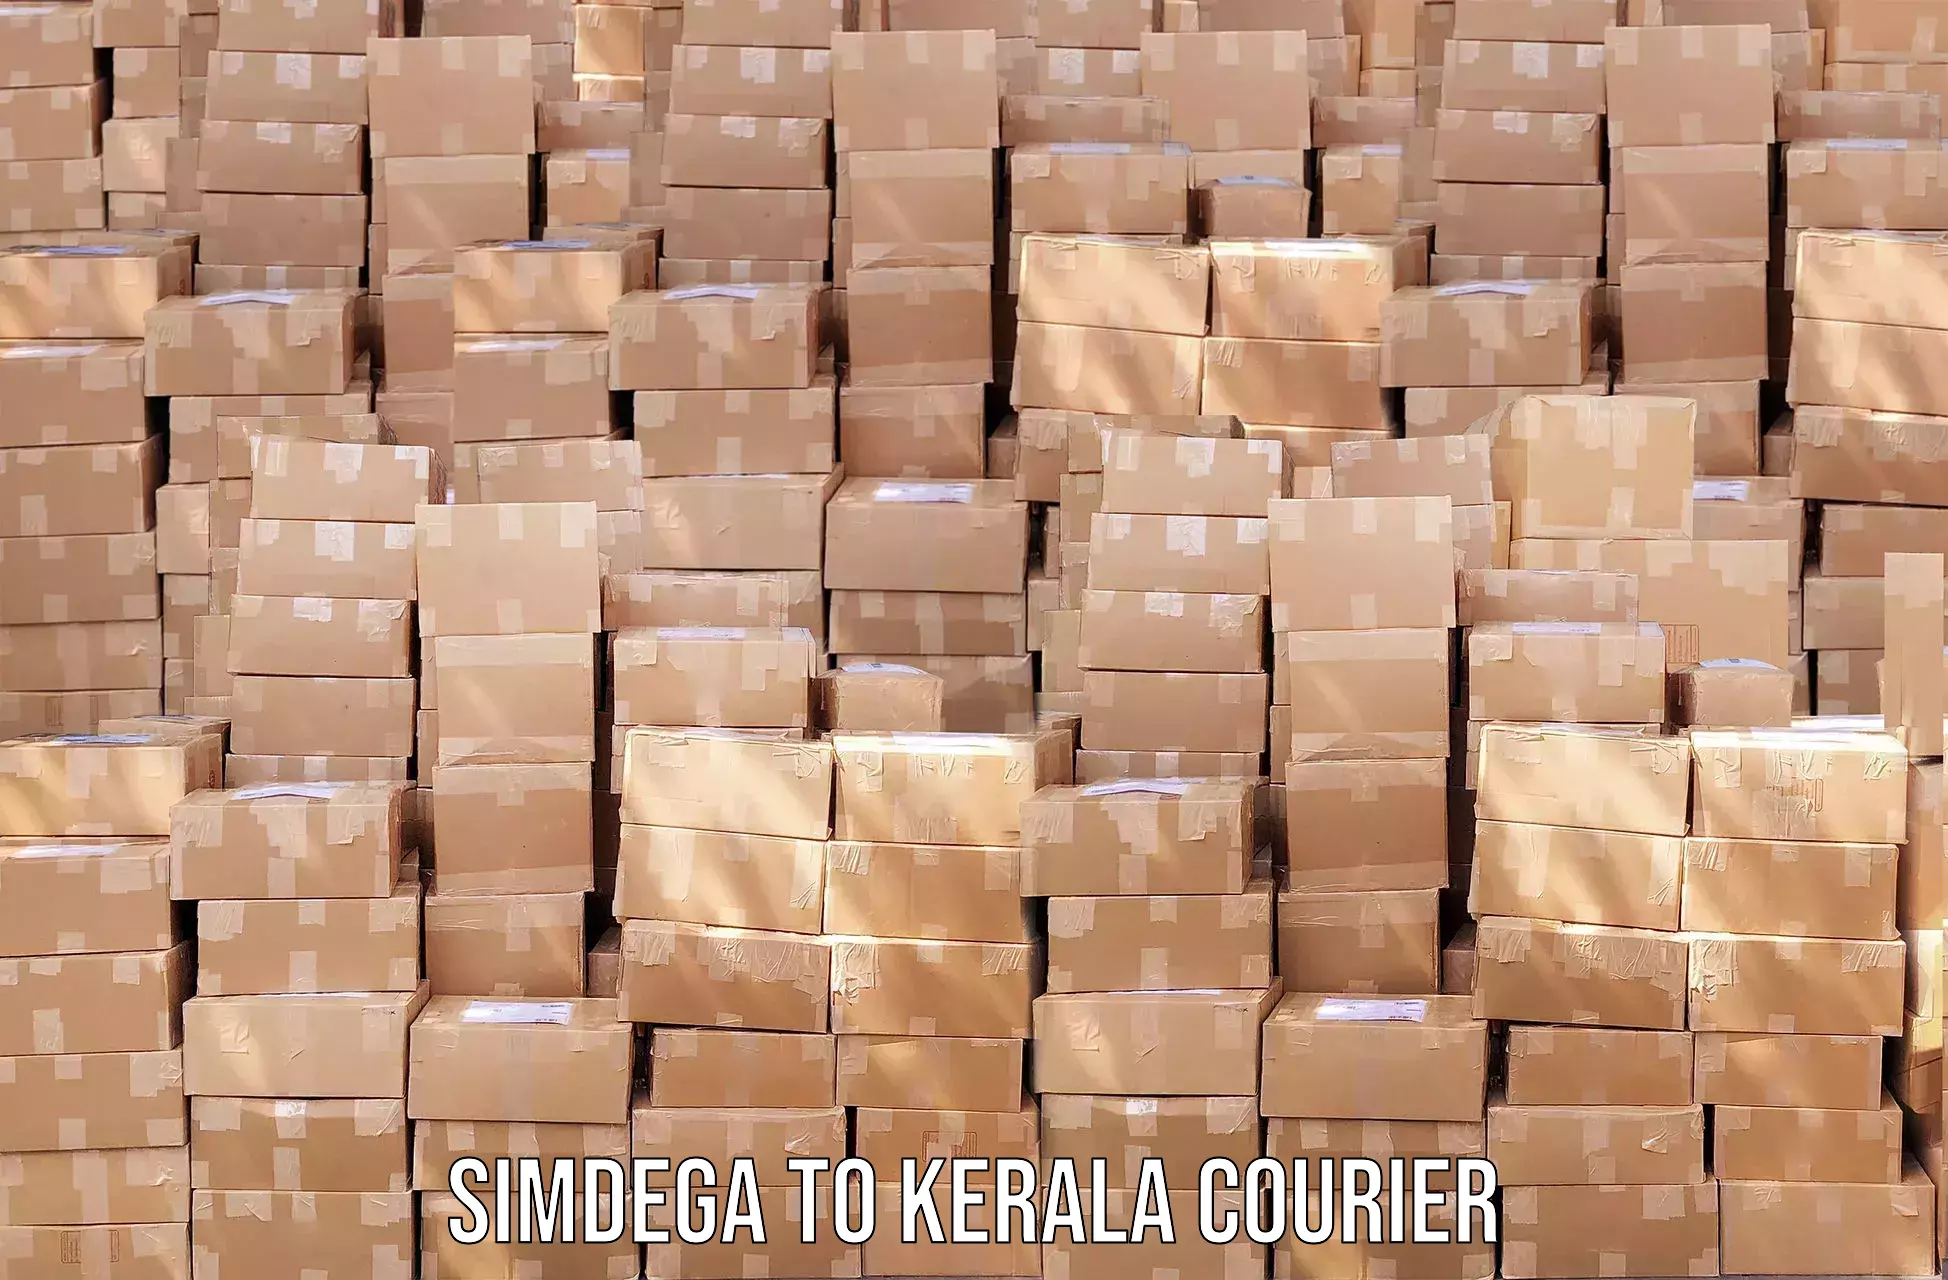 Courier service comparison Simdega to Adur Kla